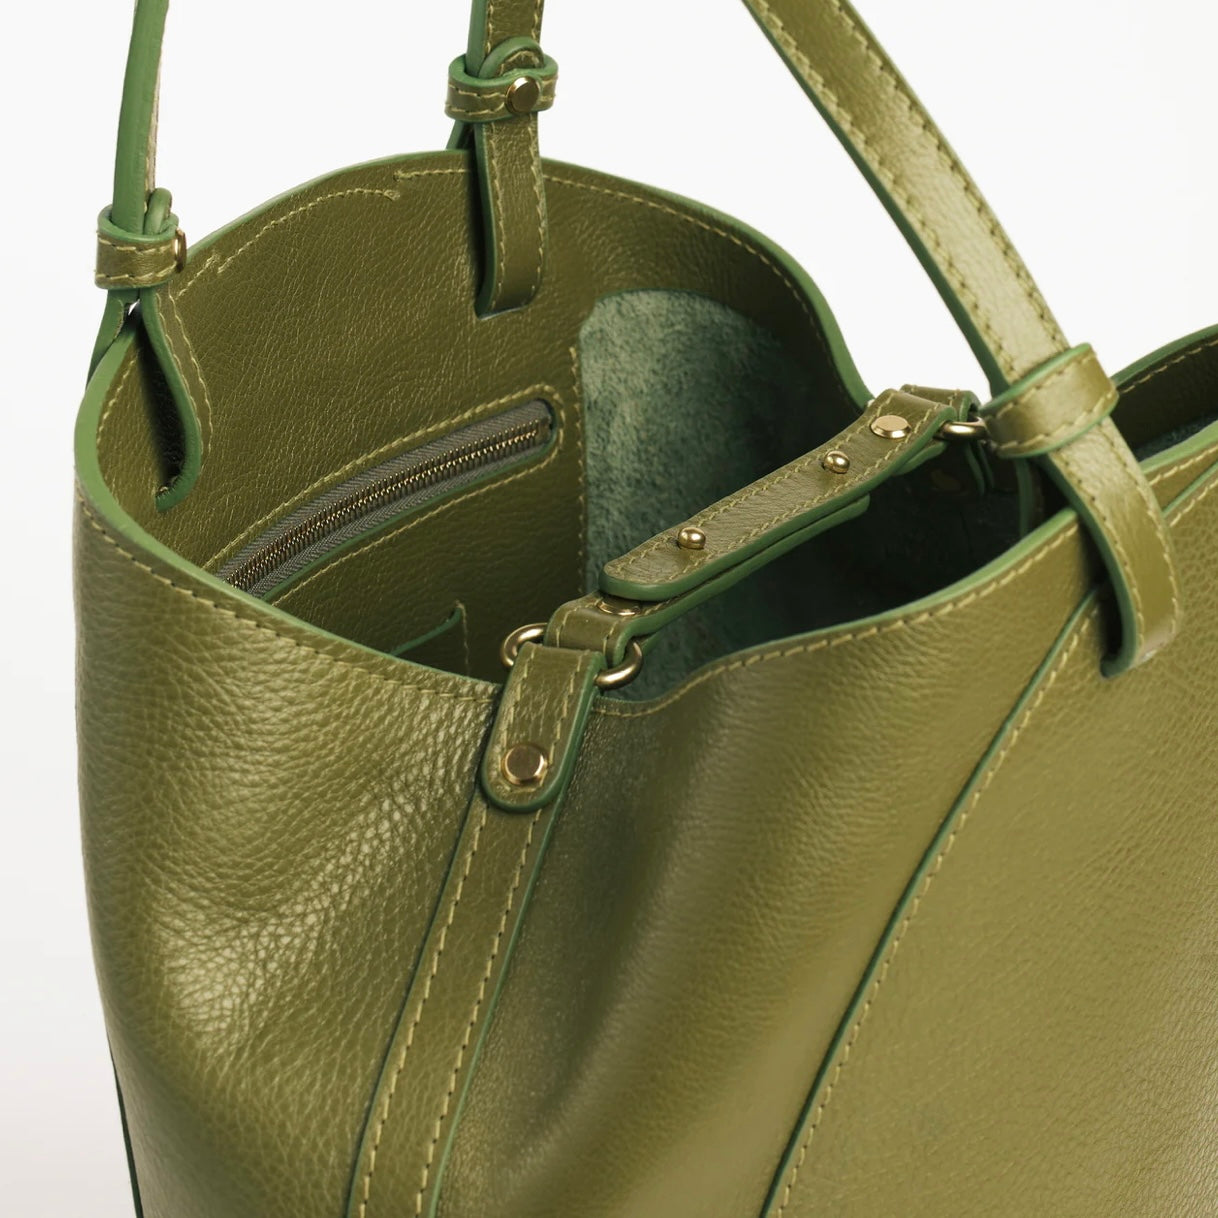 Carmen Mid-Size Leather Handbag